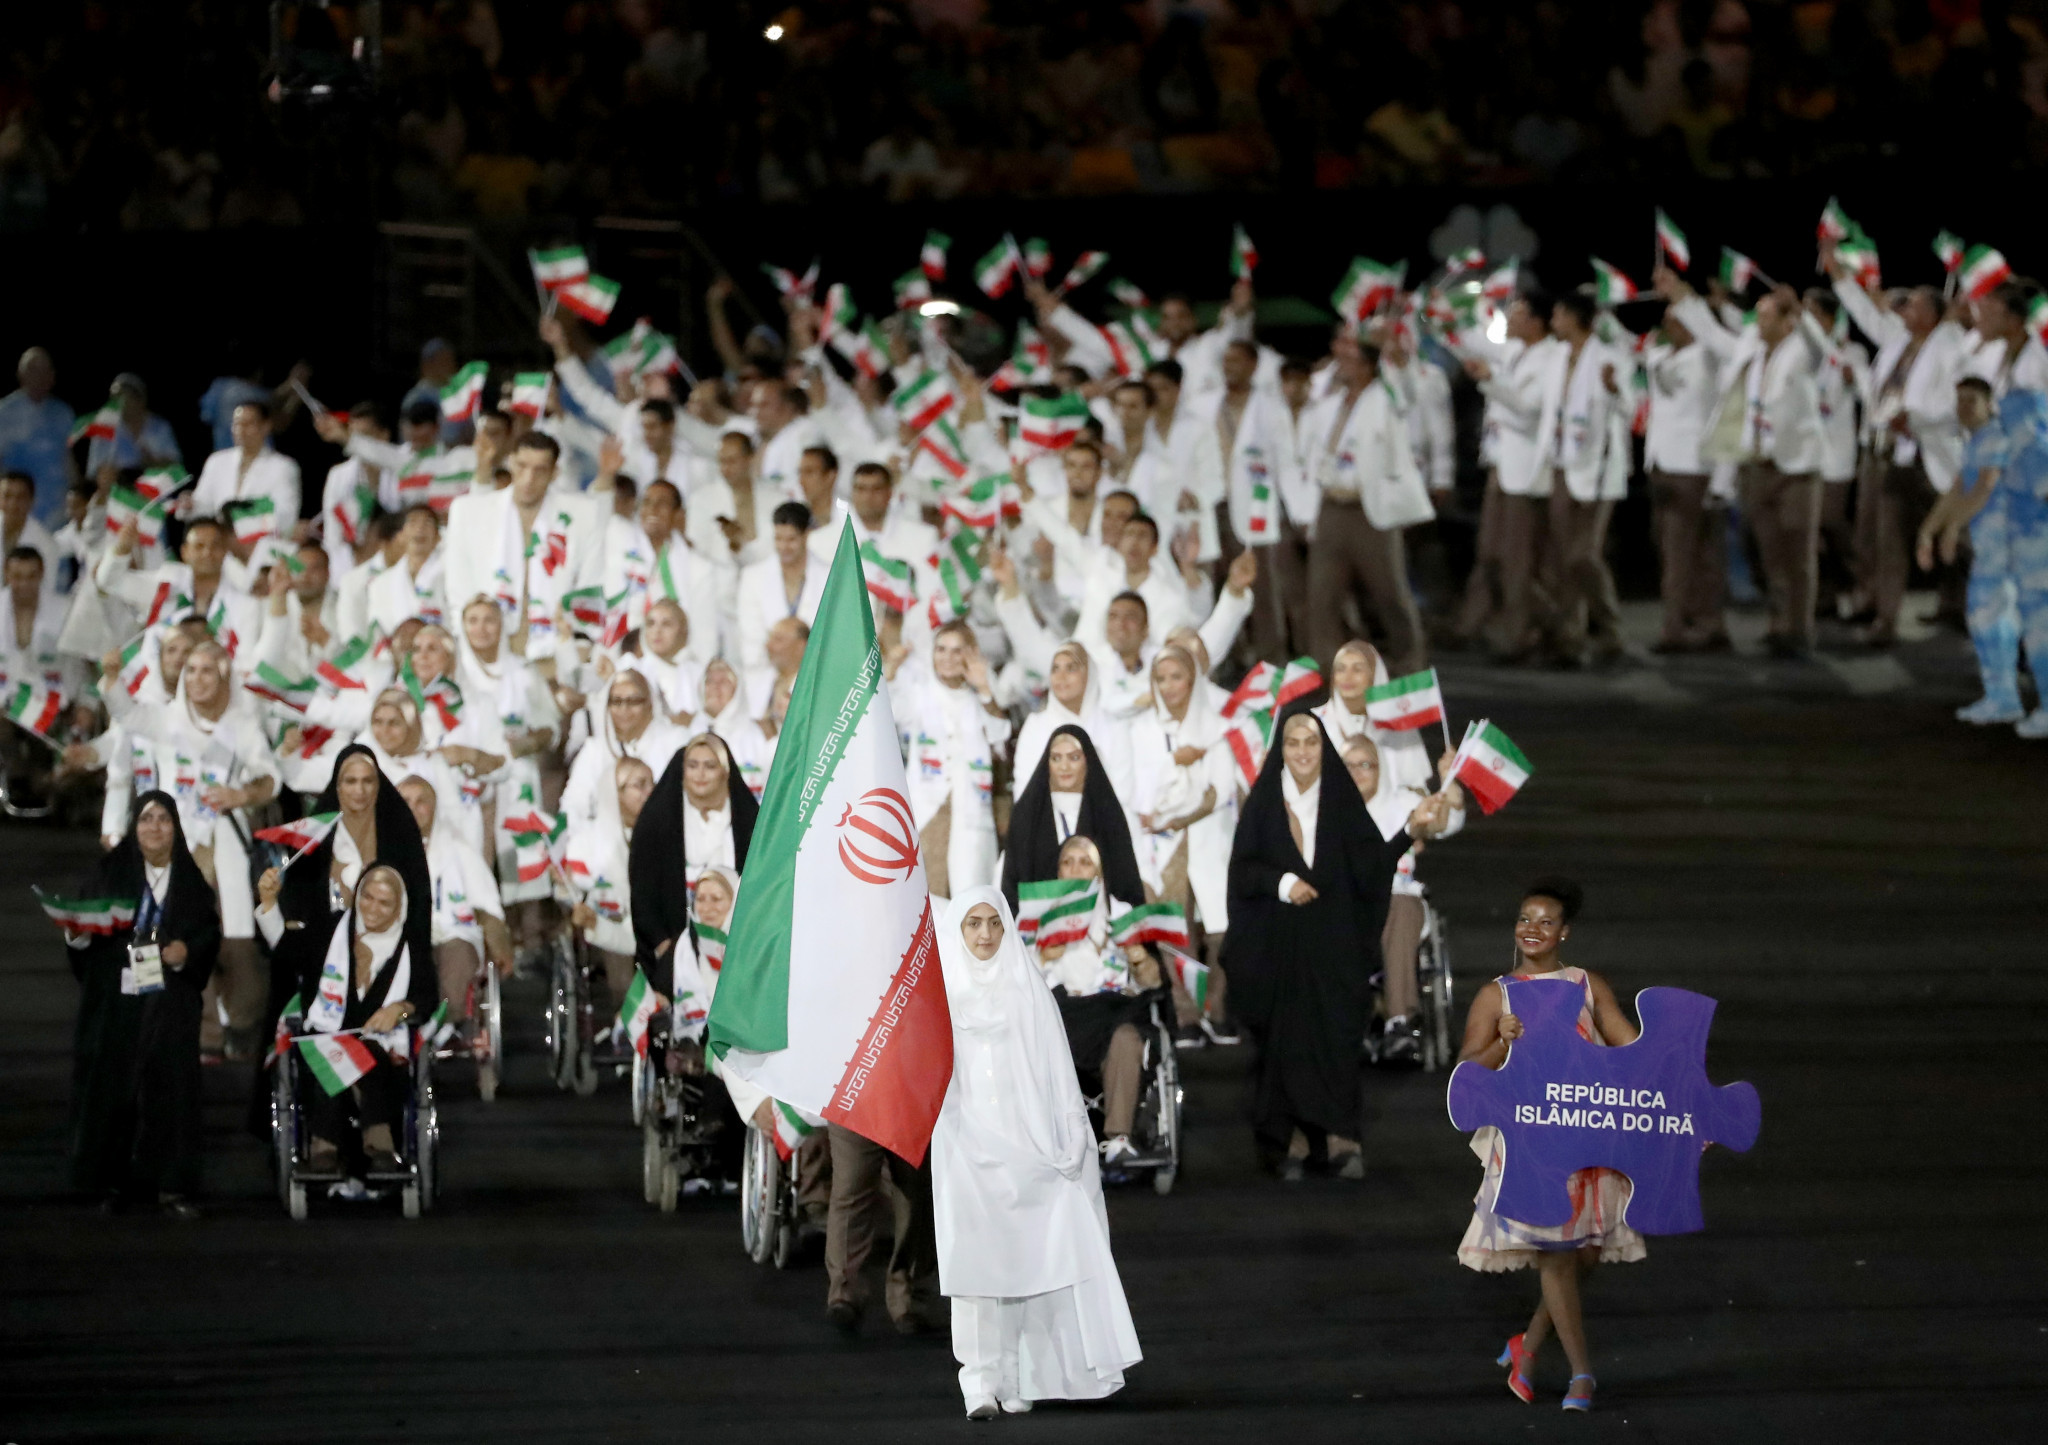 Iran set a target of finishing among top 10 countries at Tokyo 2020 Paralympics